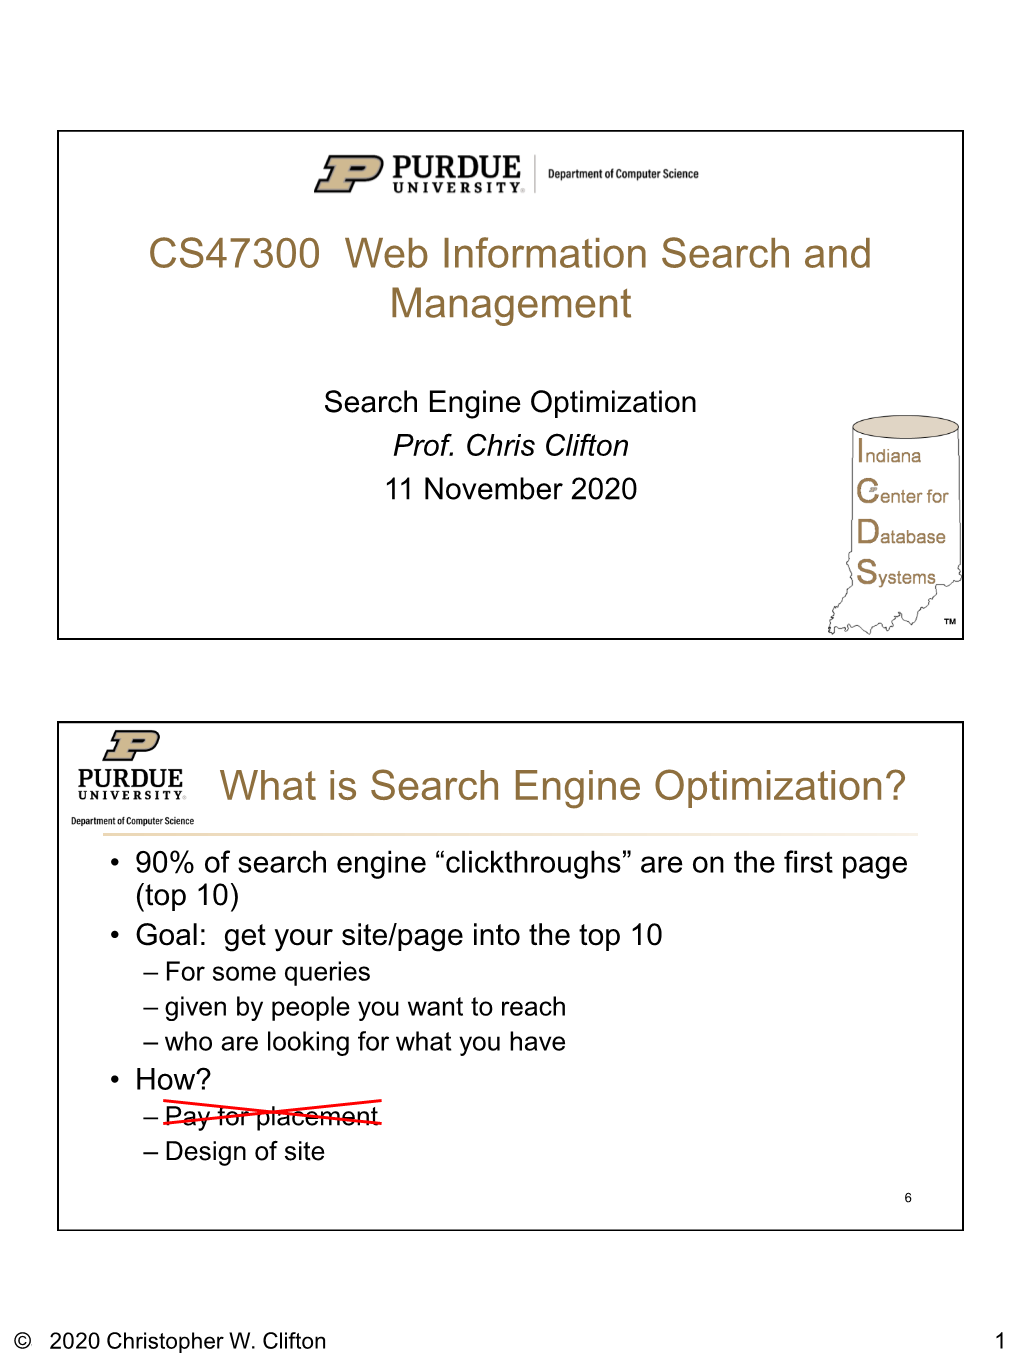 Search Engine Optimization Prof